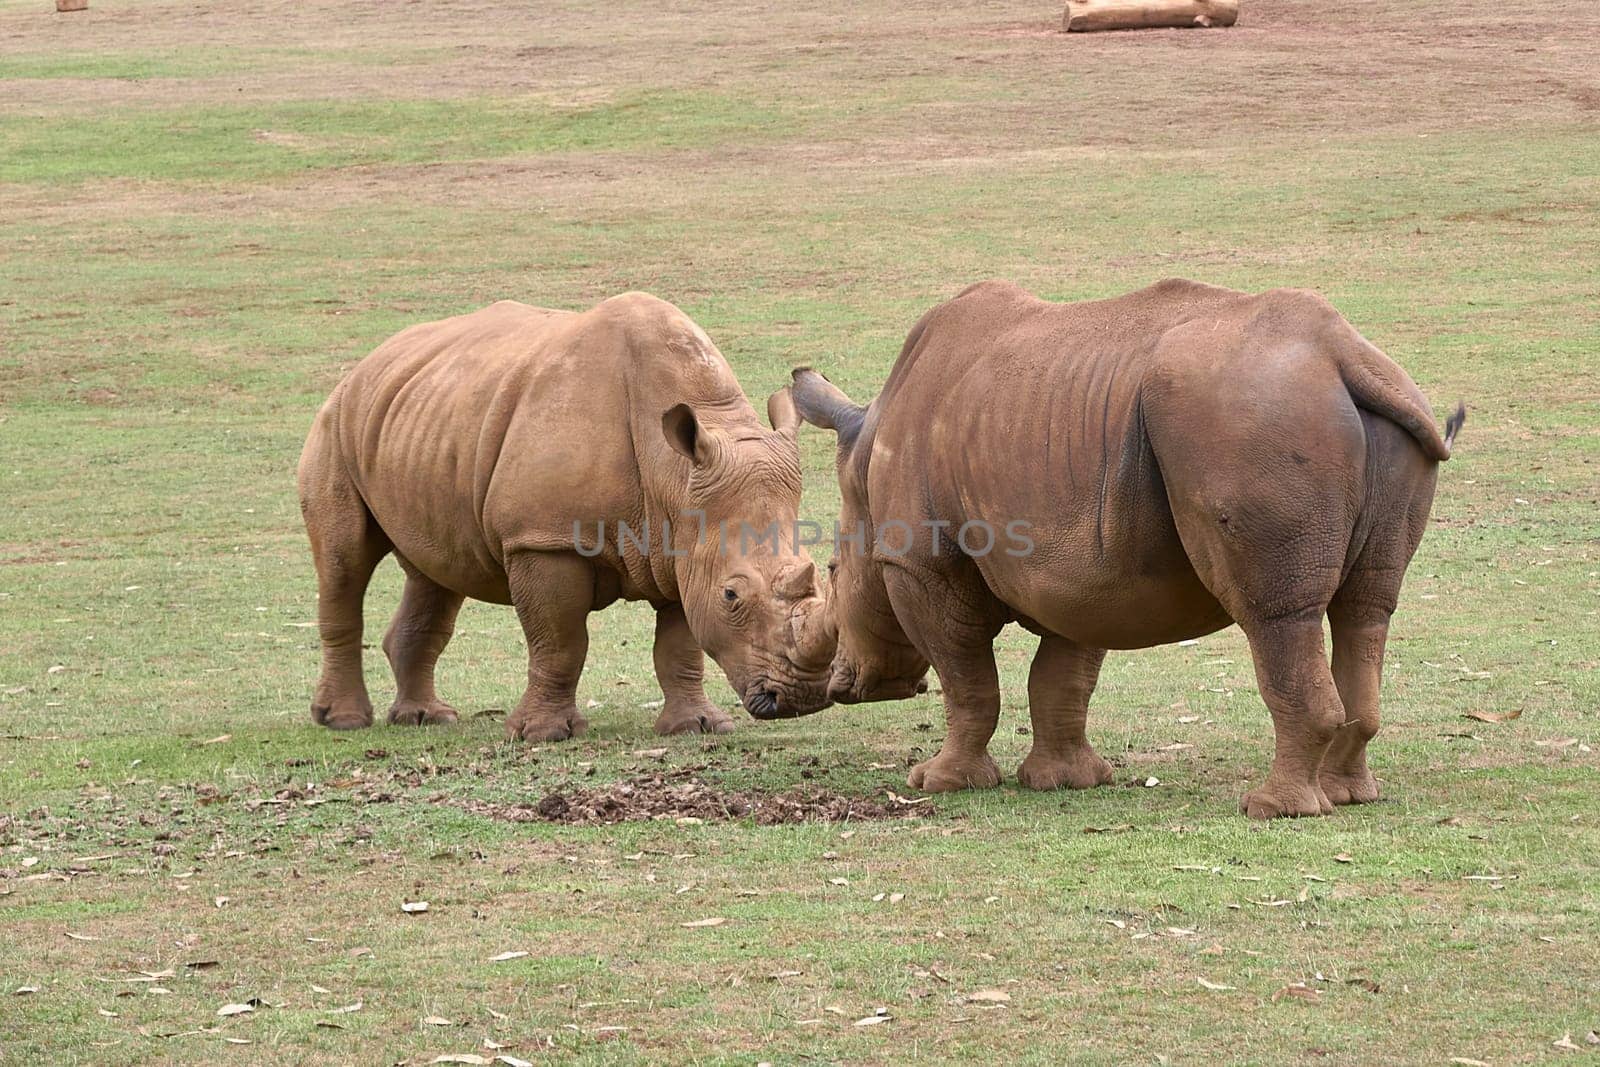 Two rhinoceroses facing each other head to head by raul_ruiz